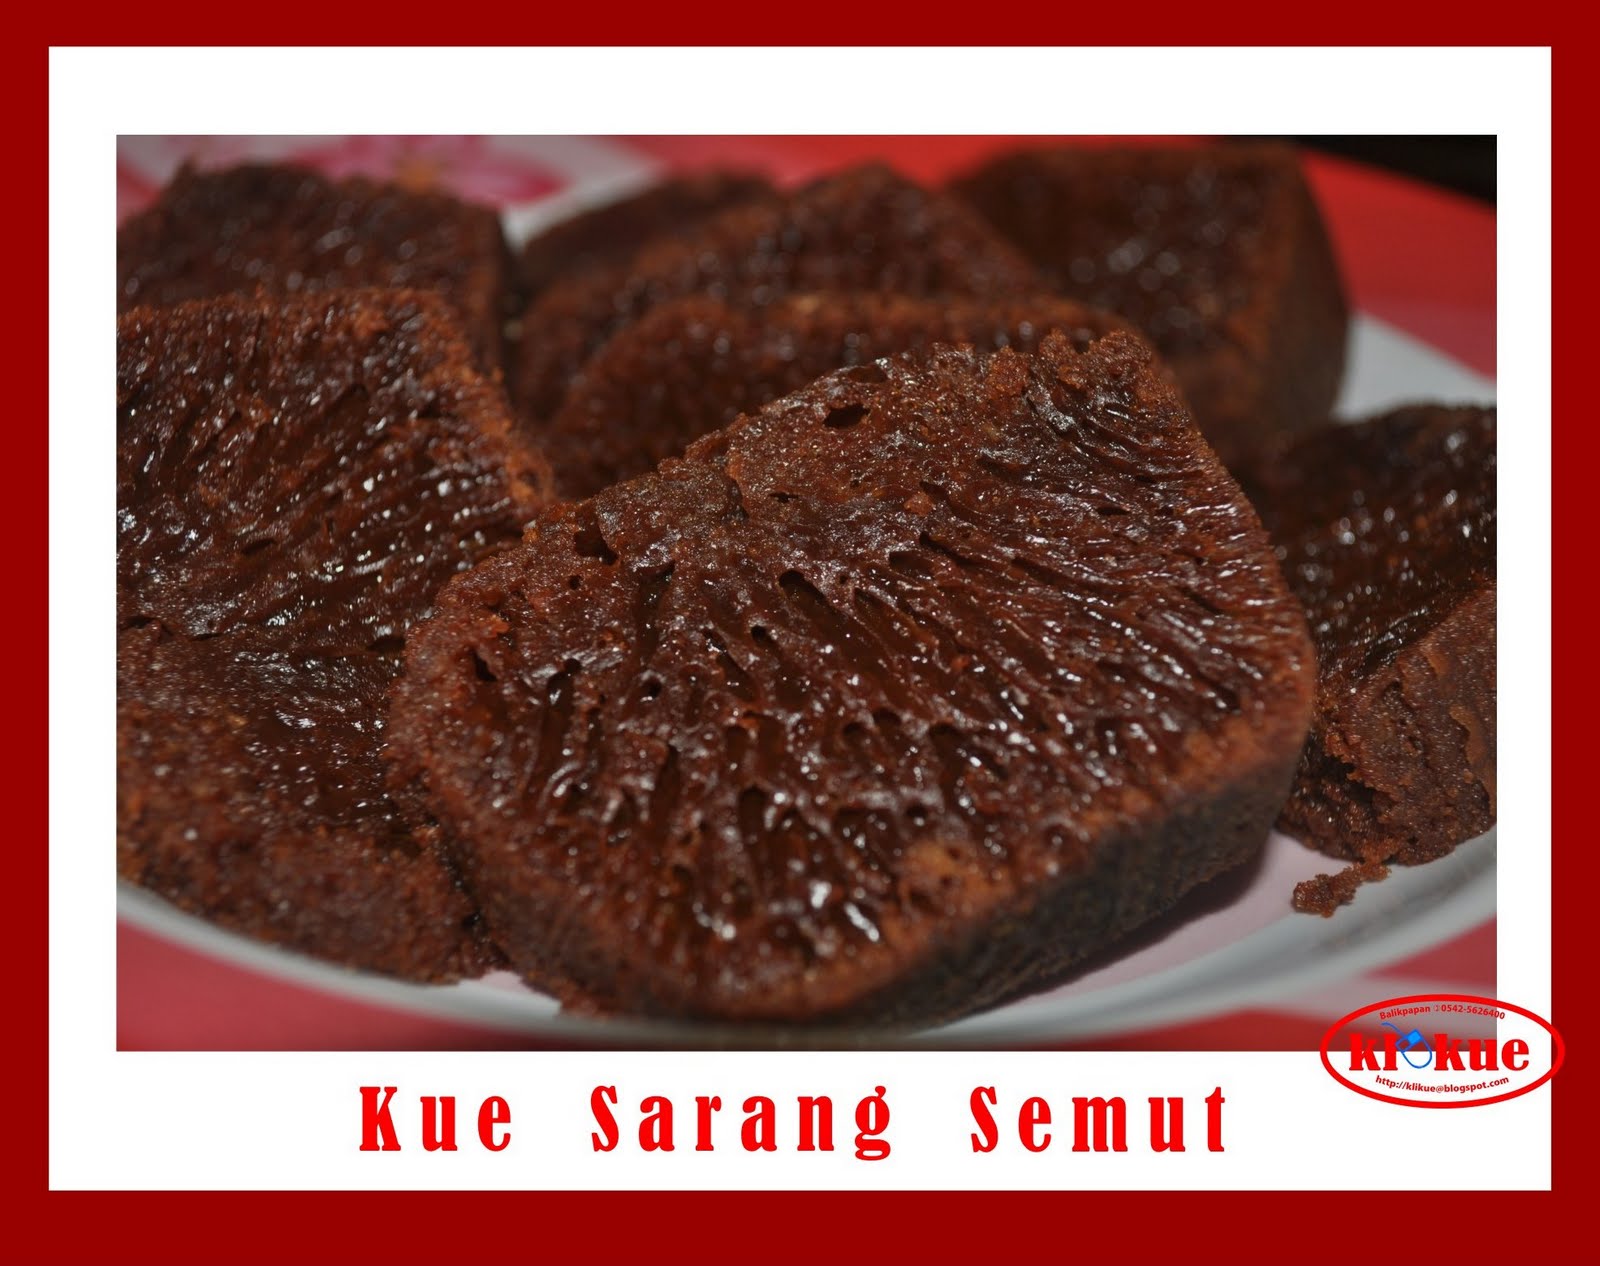 KLIKUE - Balikpapan Cakes and Puddings Online Shop: Kue Sarang Semut